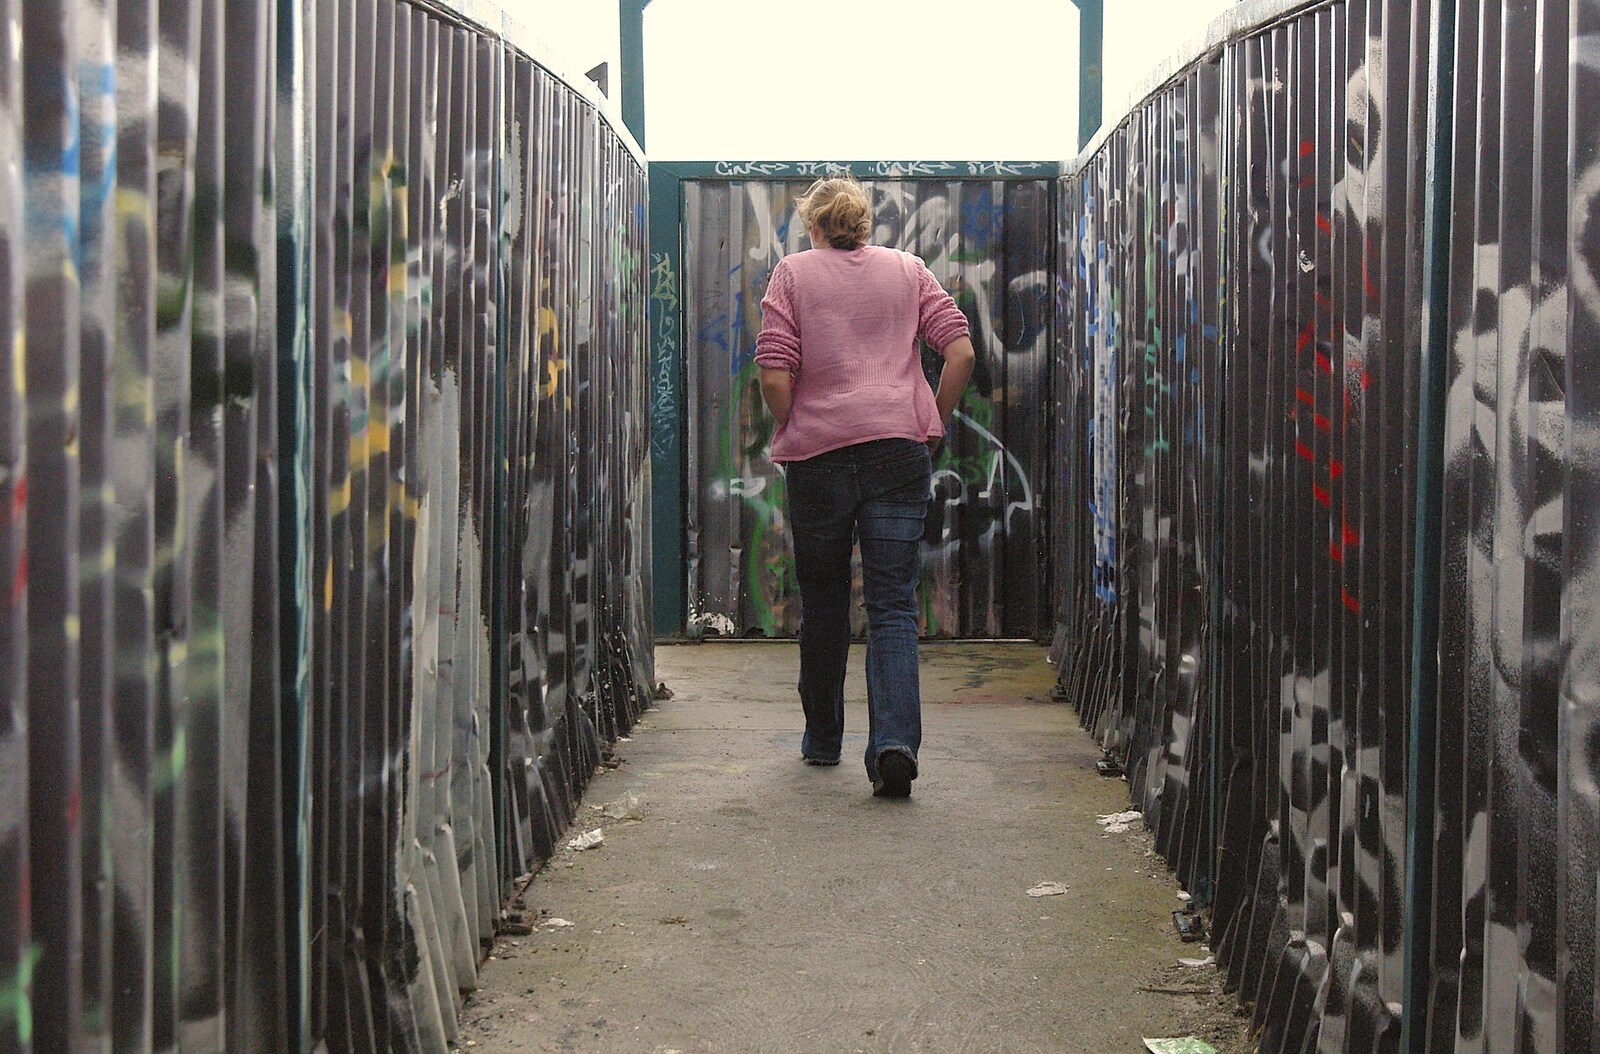 Isobel on graffiti bridge from A Trip to Blackrock and Dublin, County Dublin, Ireland - 12th August 2006